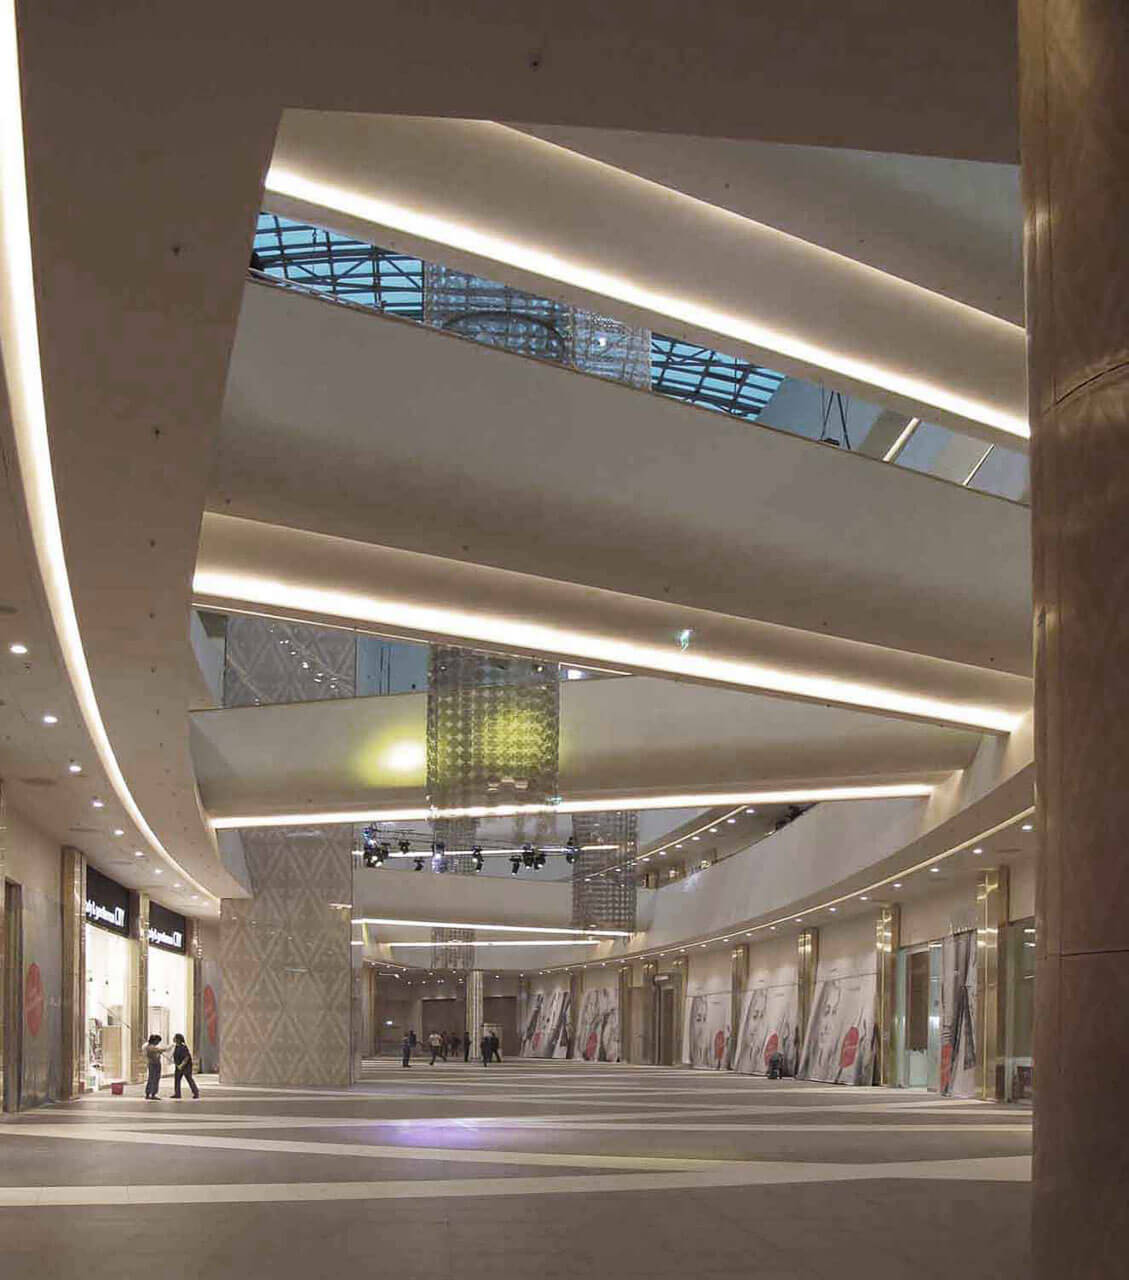 Galeria Mall shopping complex